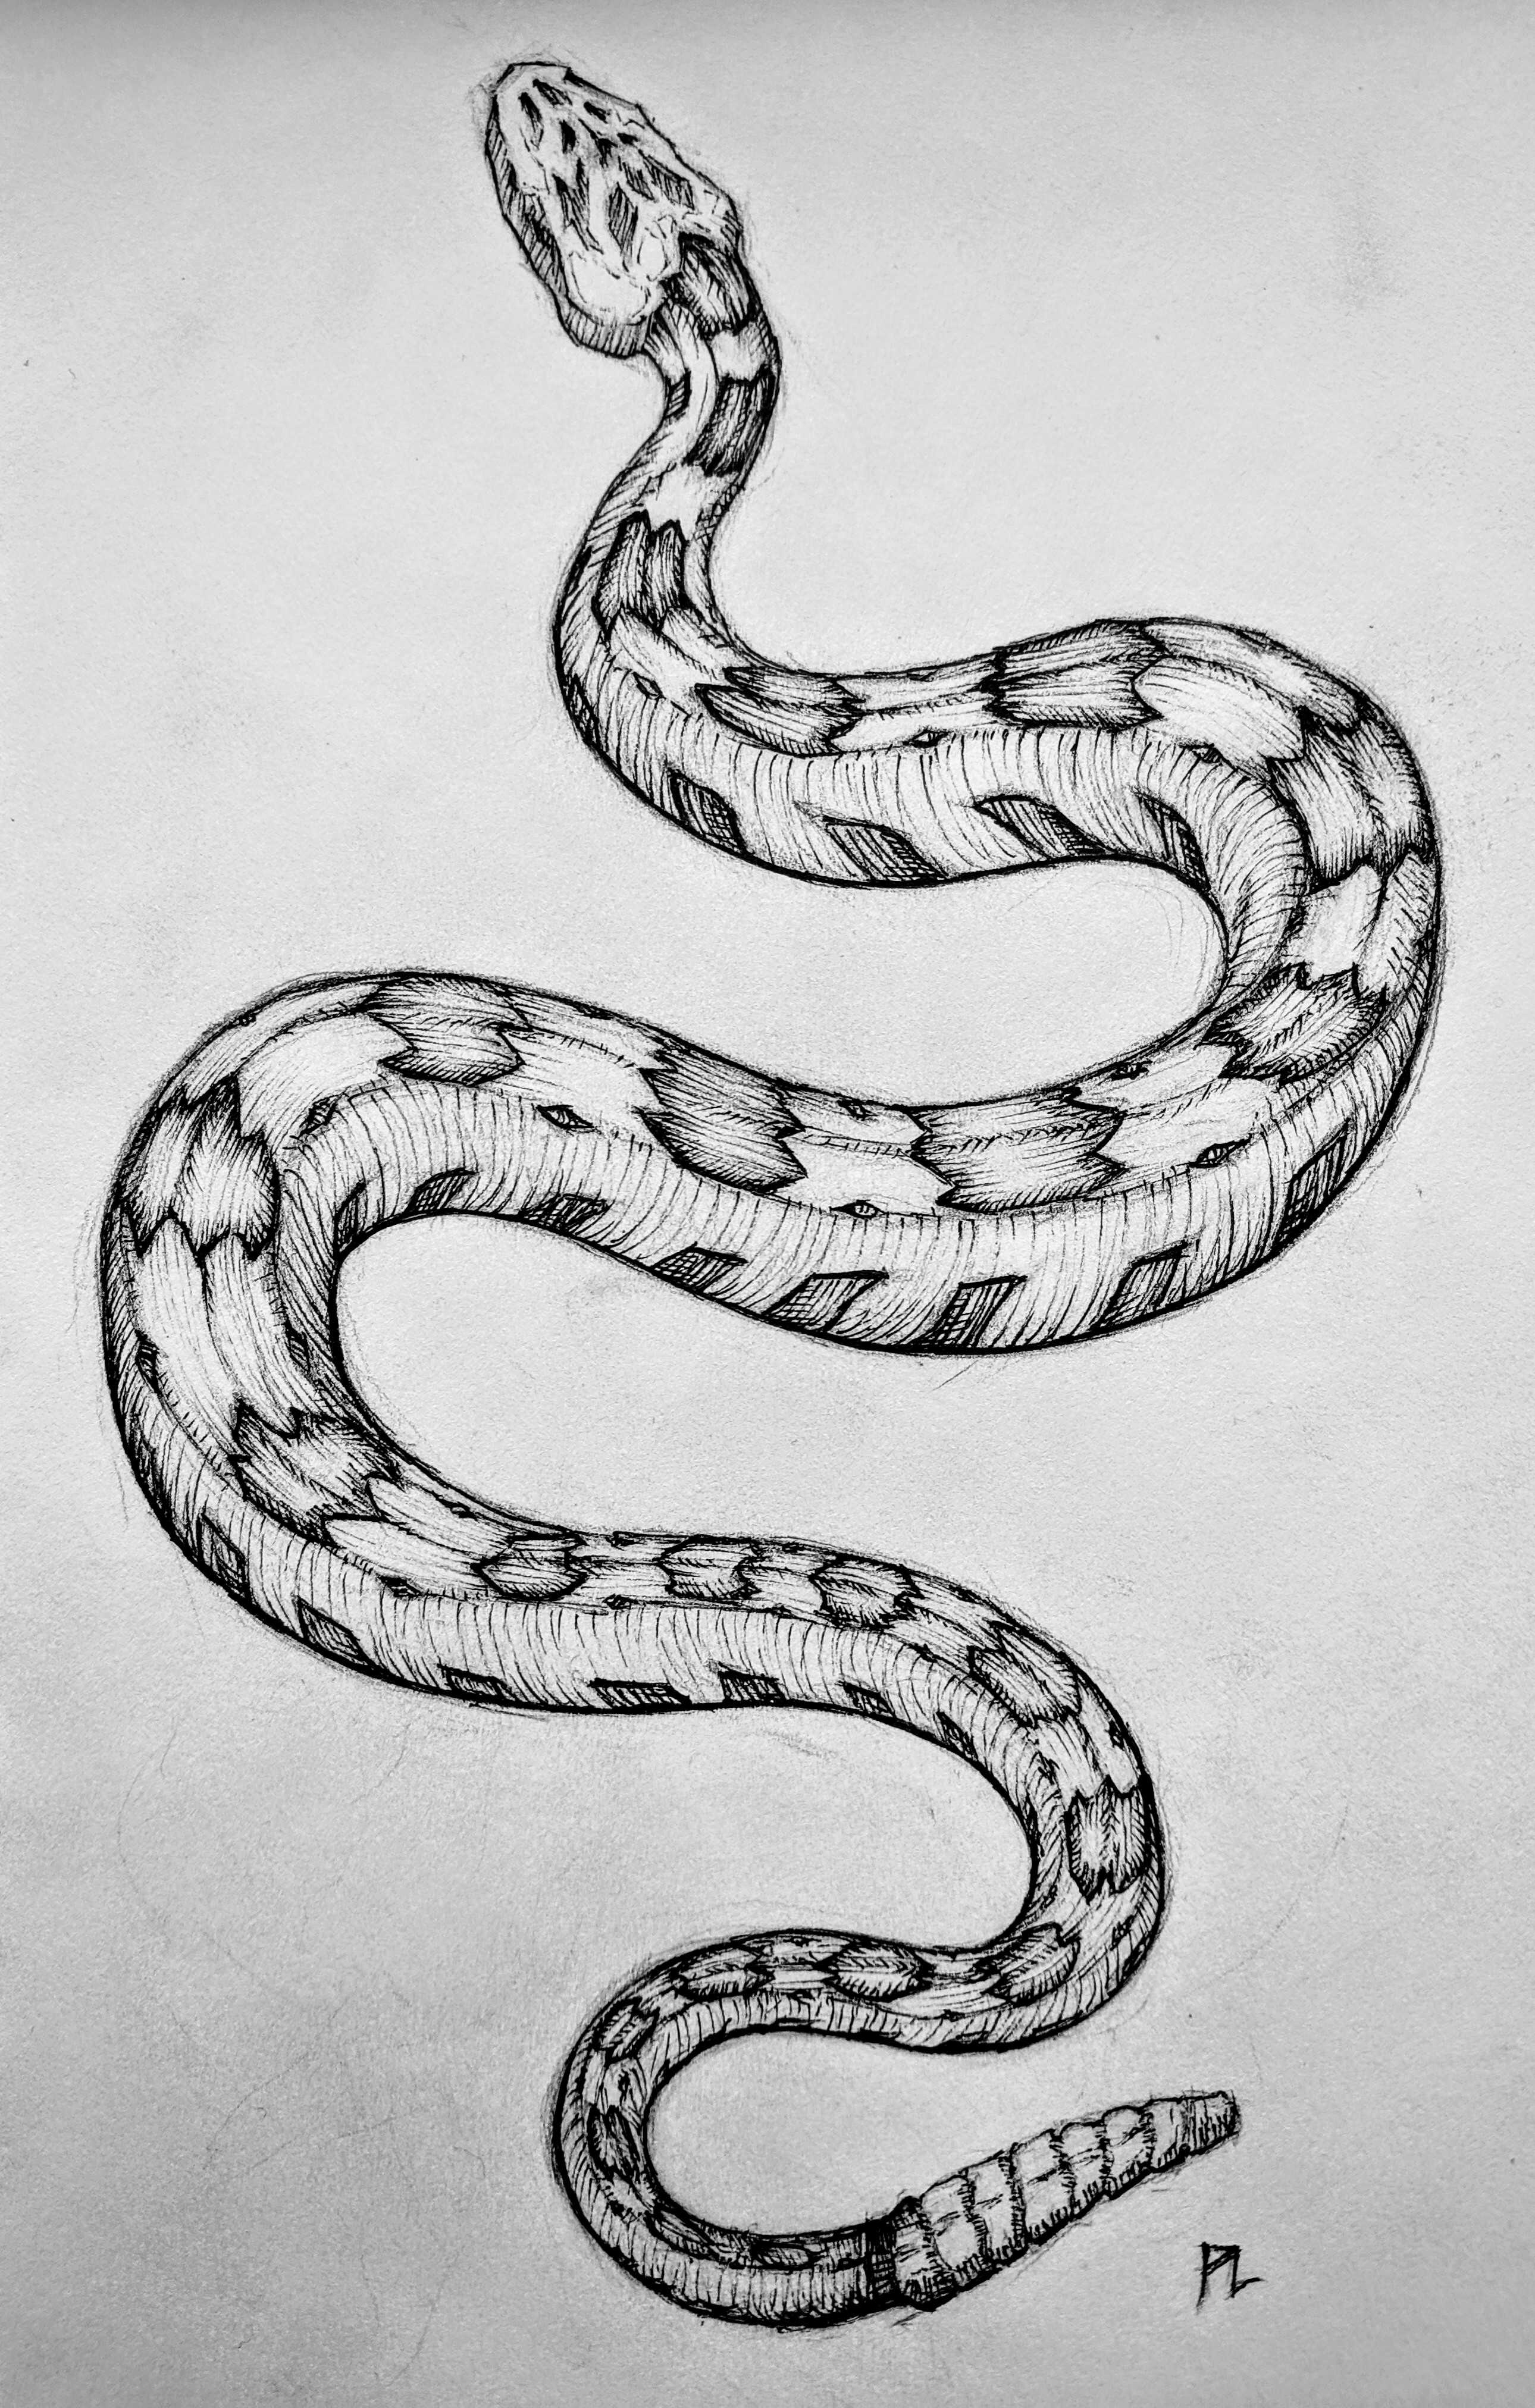 Coiled Rattlesnake Drawing Stock Illustrations RoyaltyFree Vector  Graphics  Clip Art  iStock